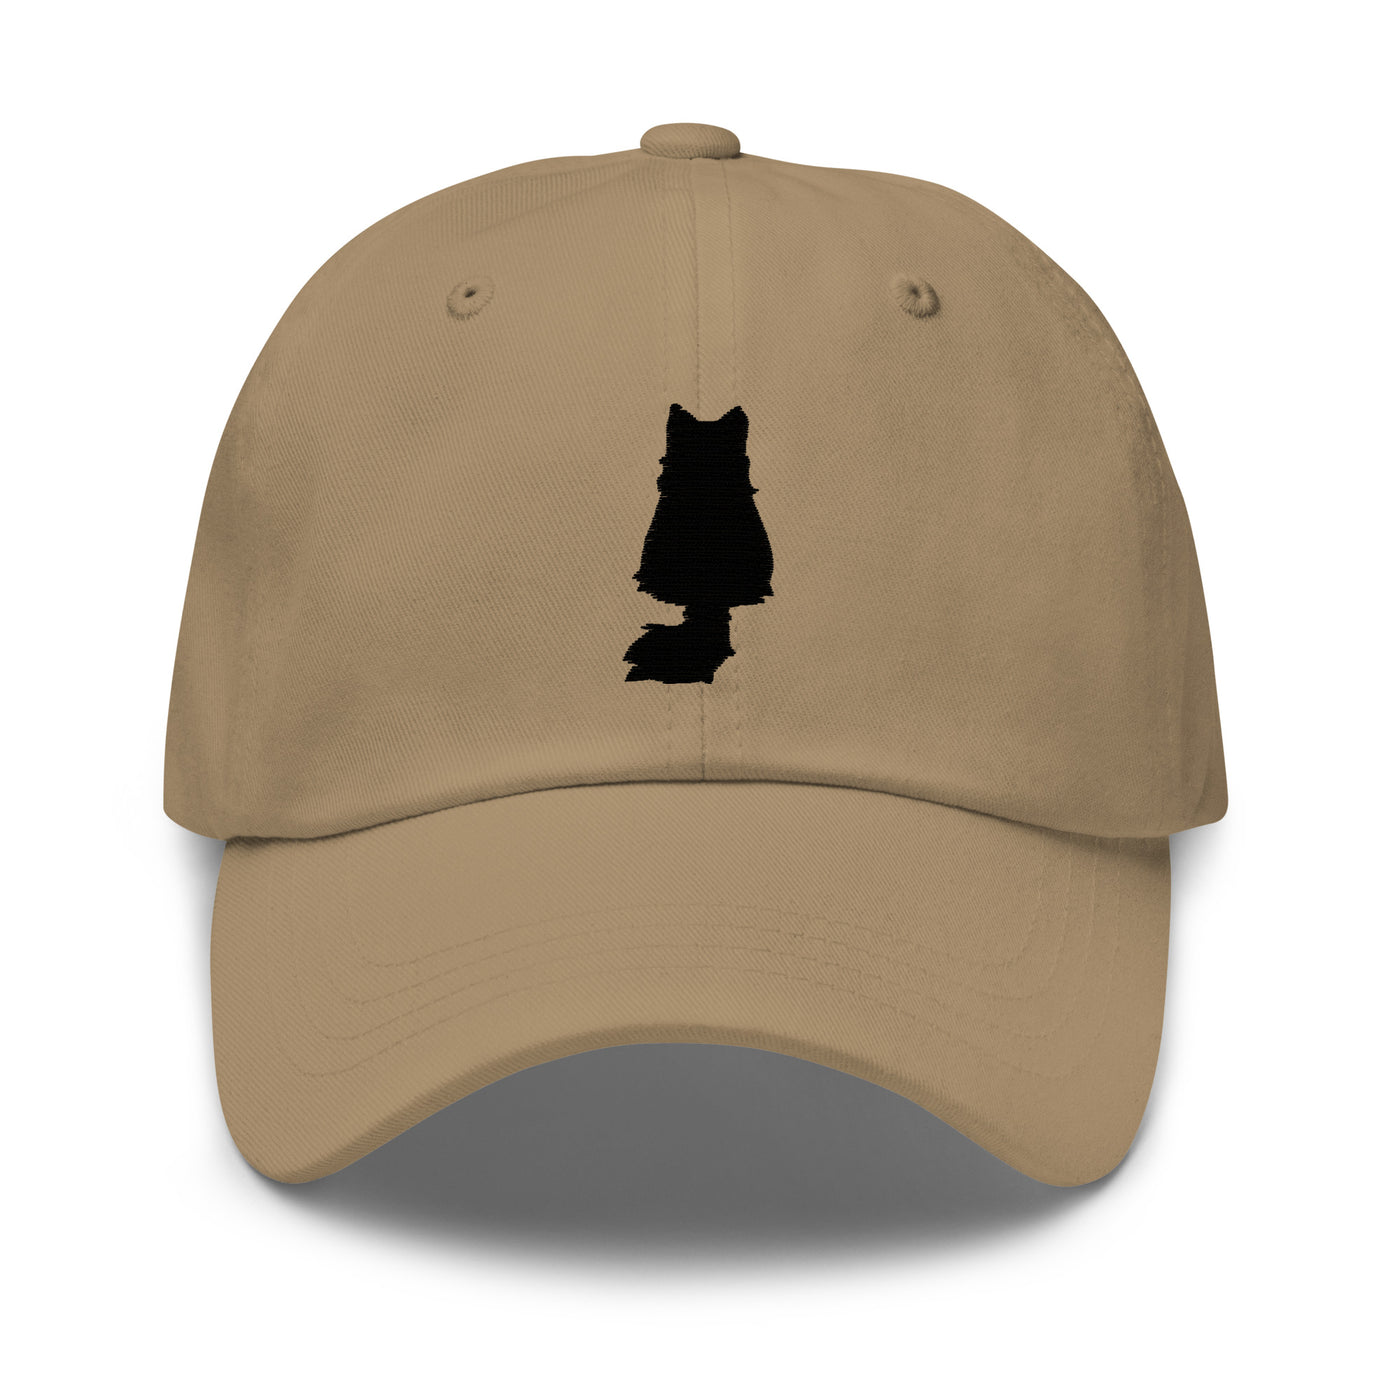 black cat hat | black cat embroidered hat | black cat embroidery | long haired black cat | I love black cat | Crazy cat lazy hat